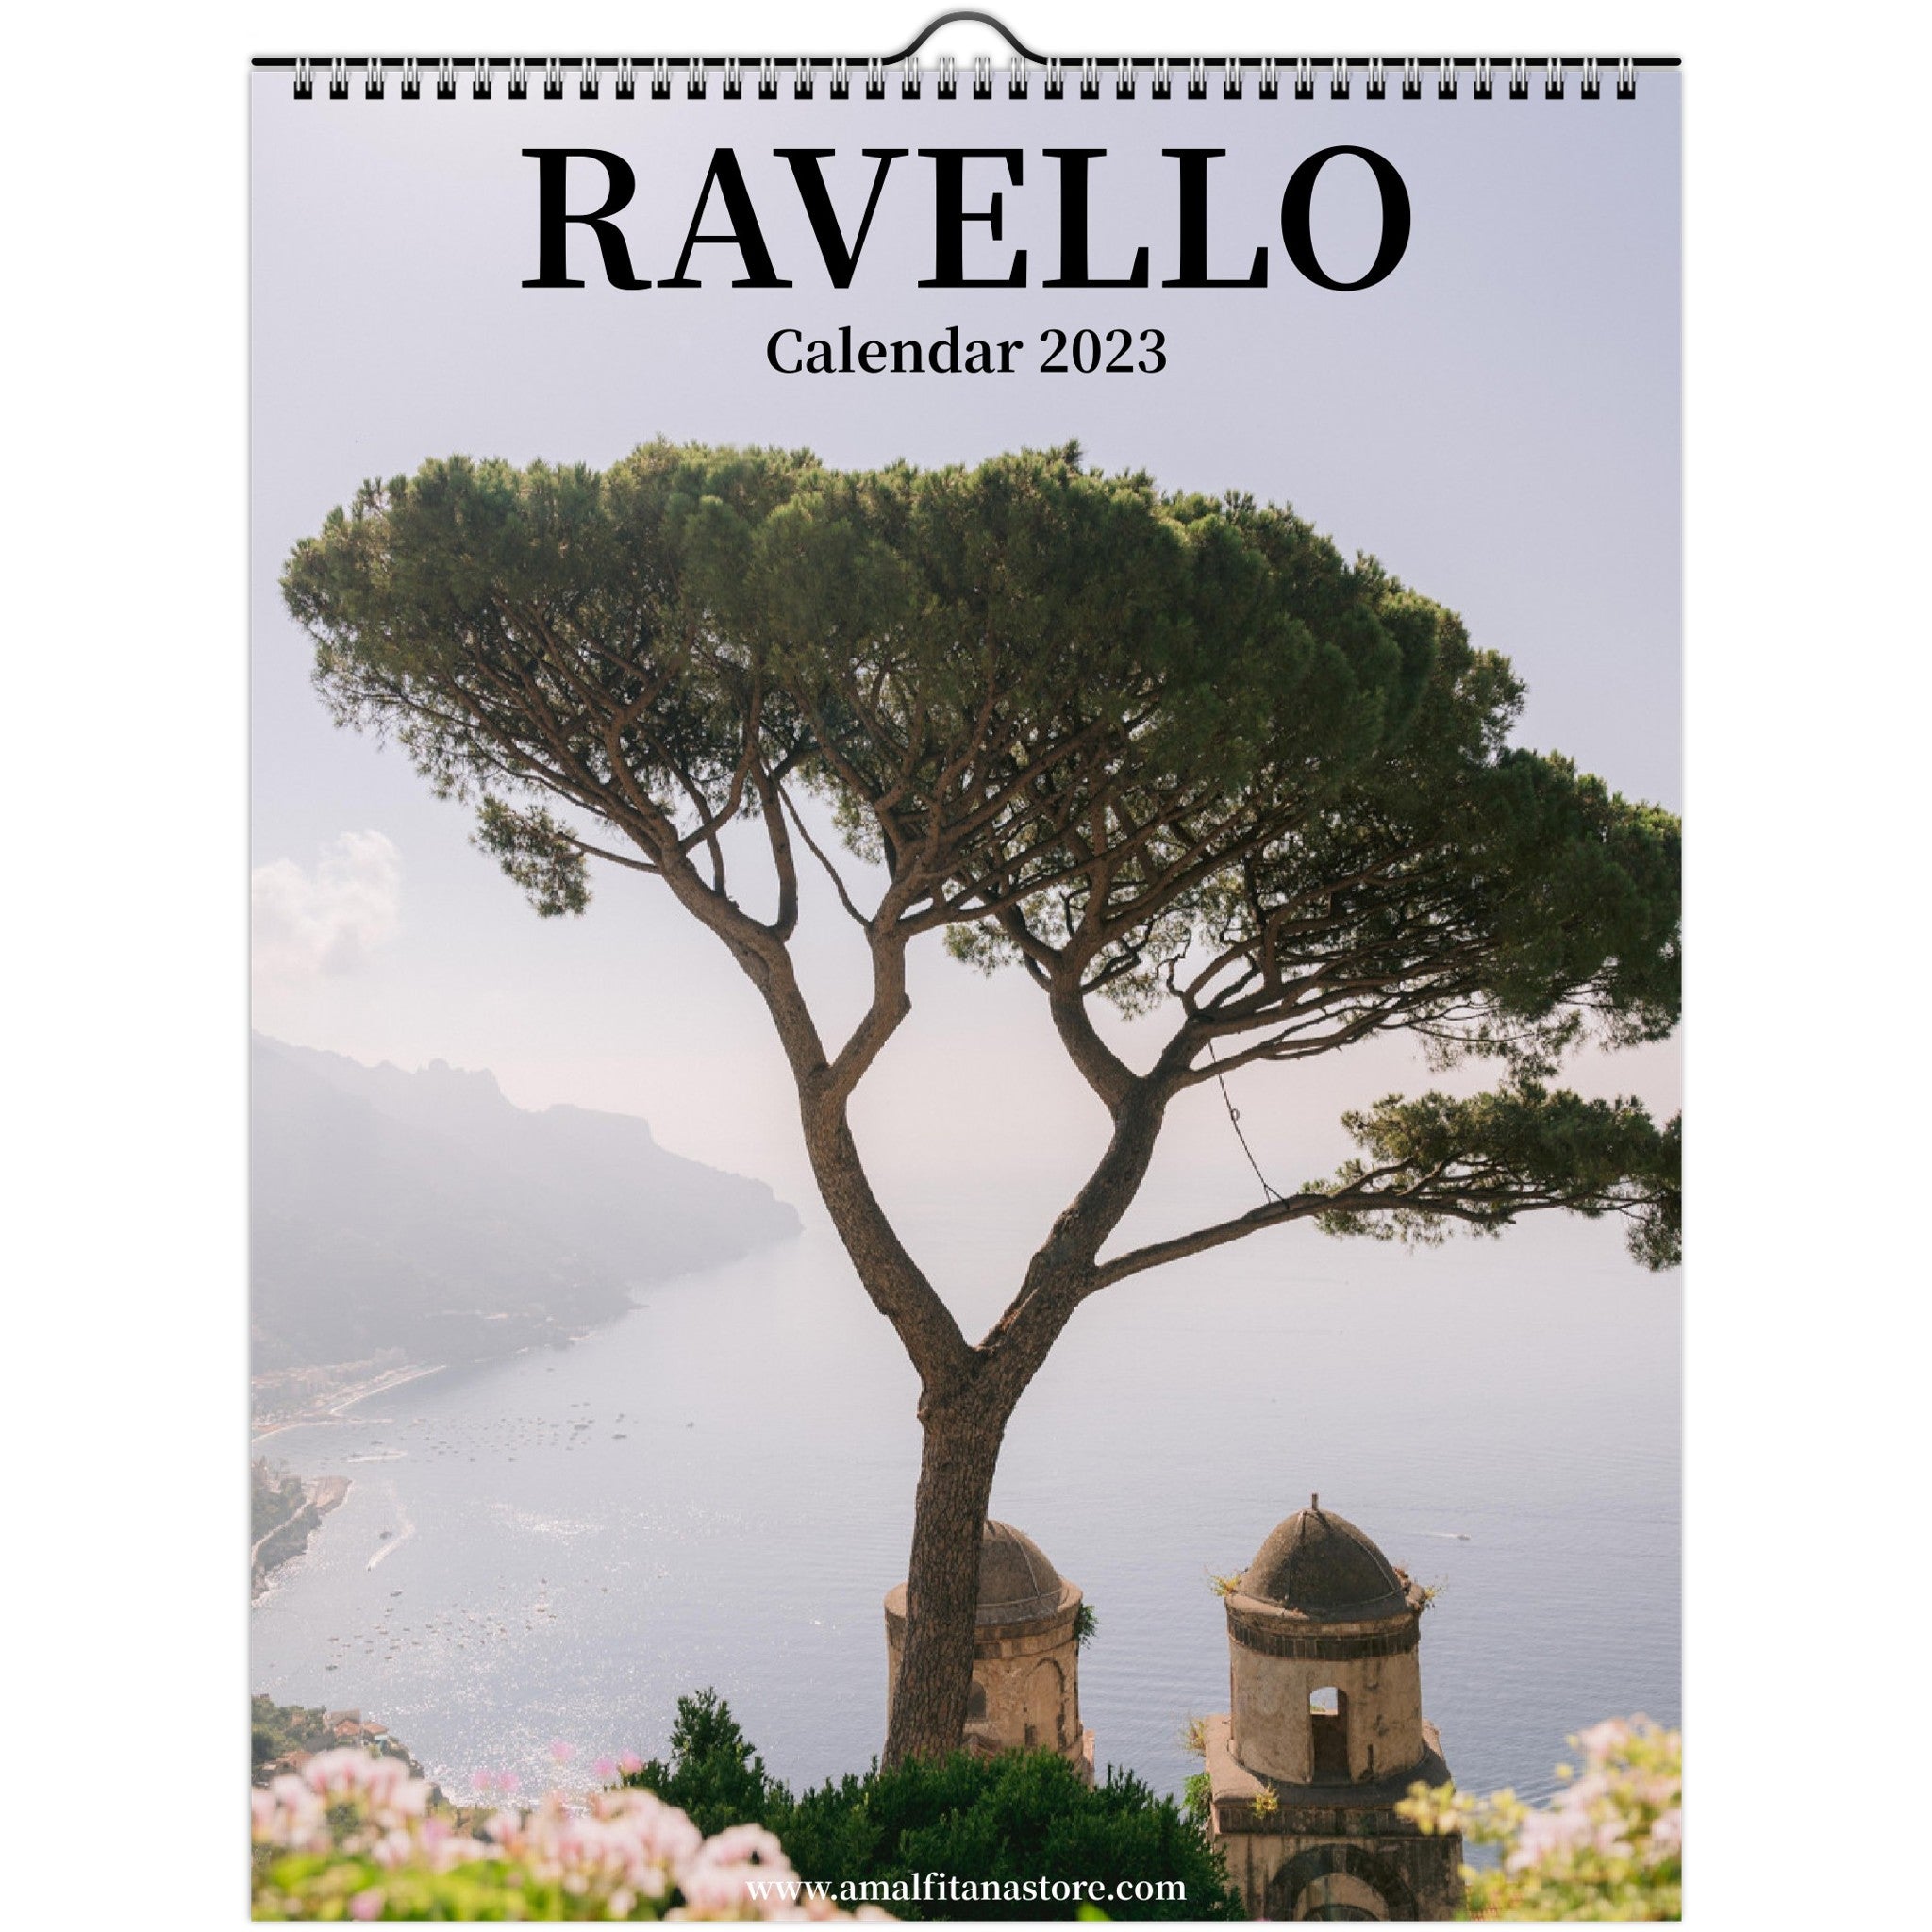 Ravello Wall calendars 2023 - AMALFITANA STORE